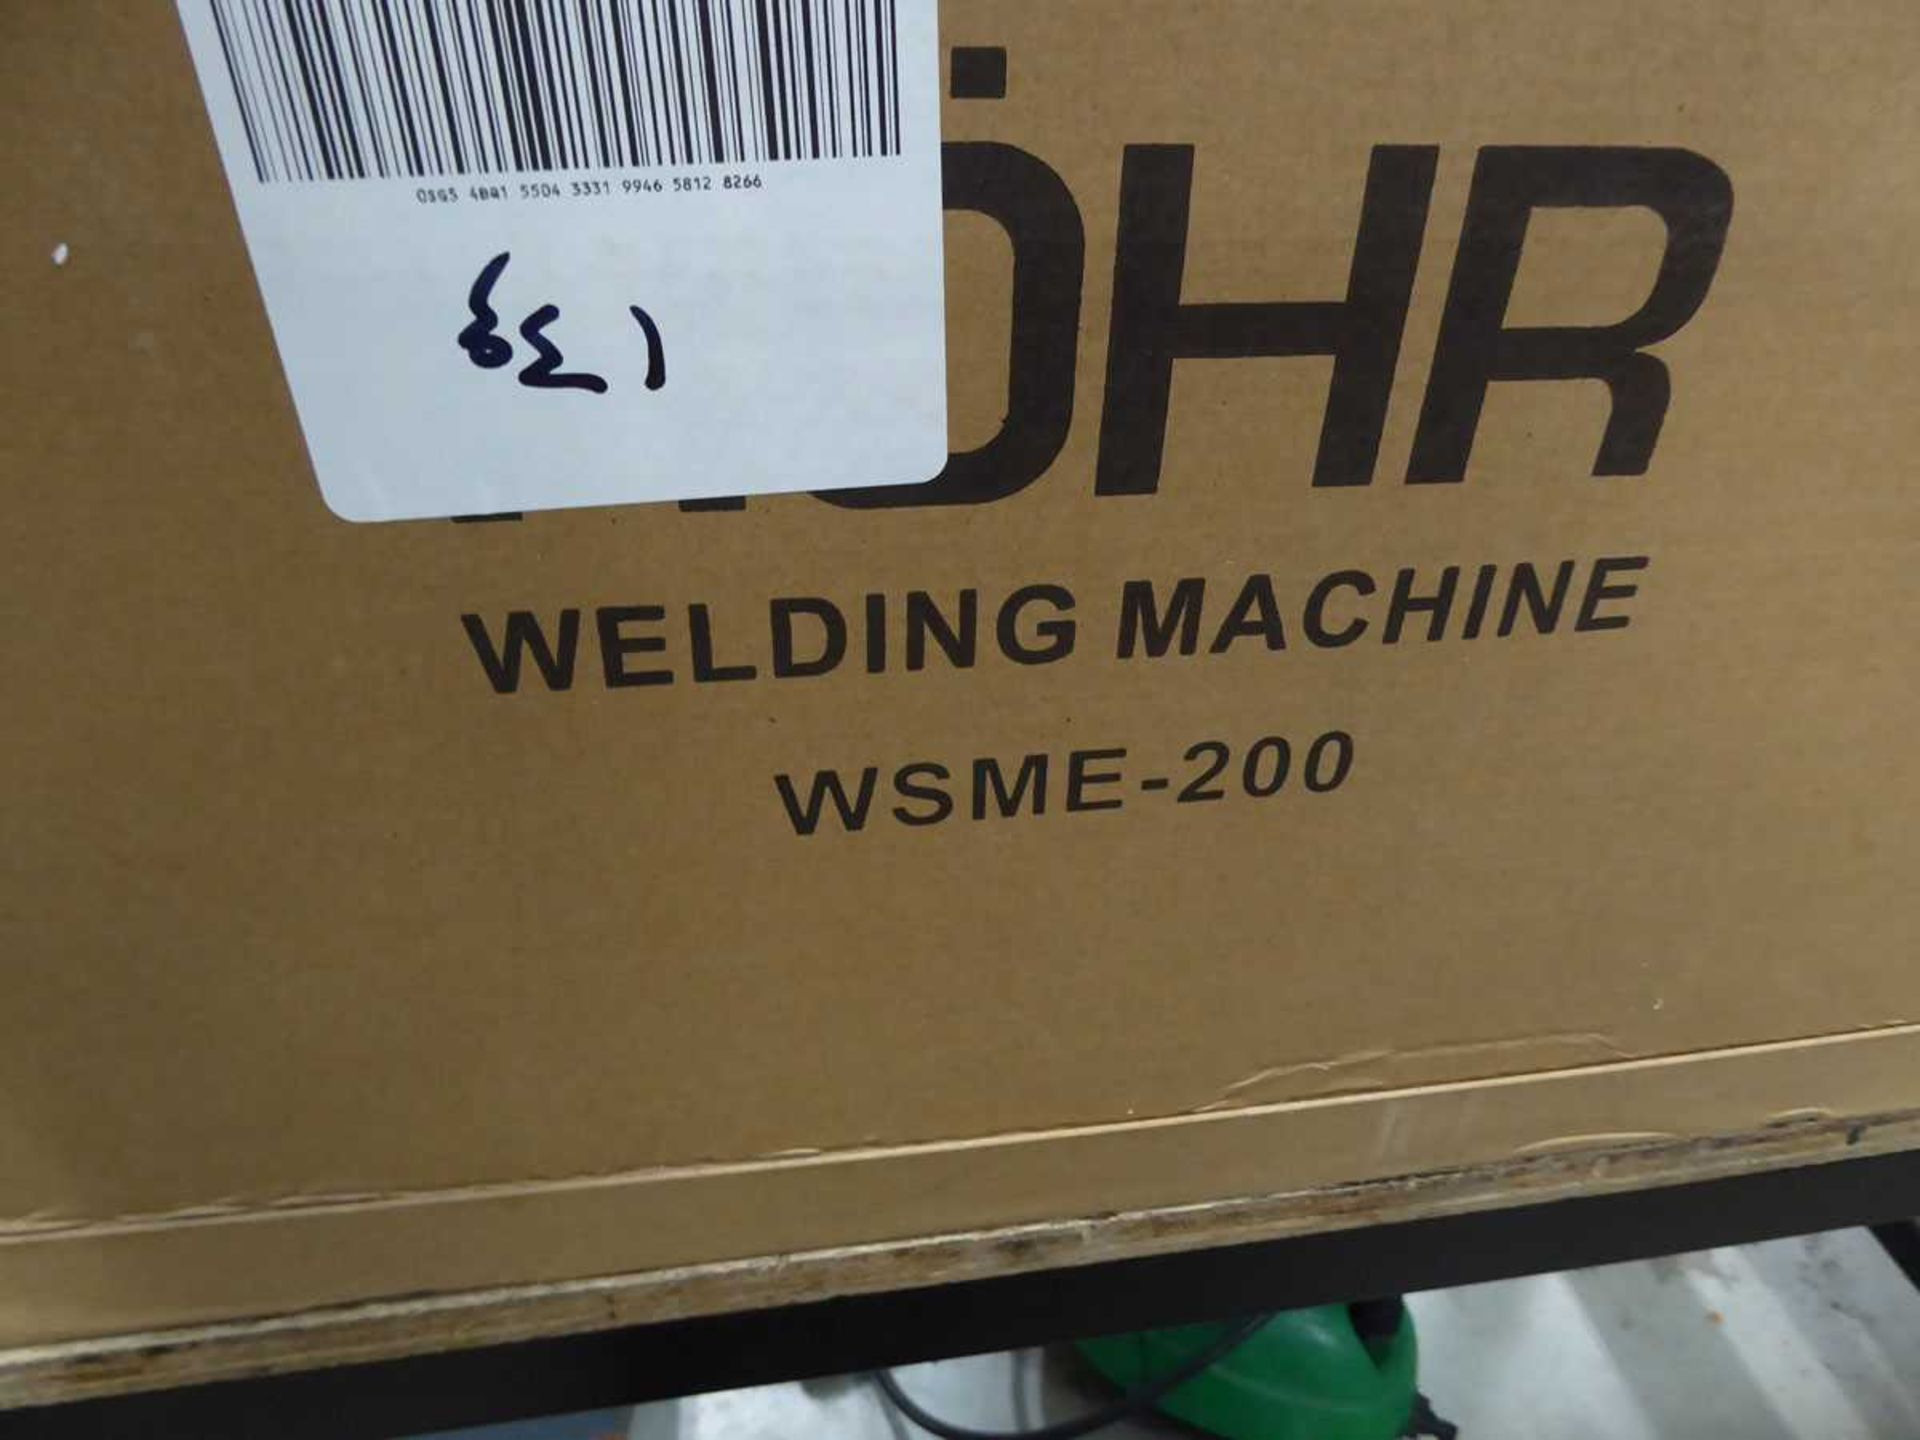 Rohr WSME 200 welding machine - Image 2 of 4